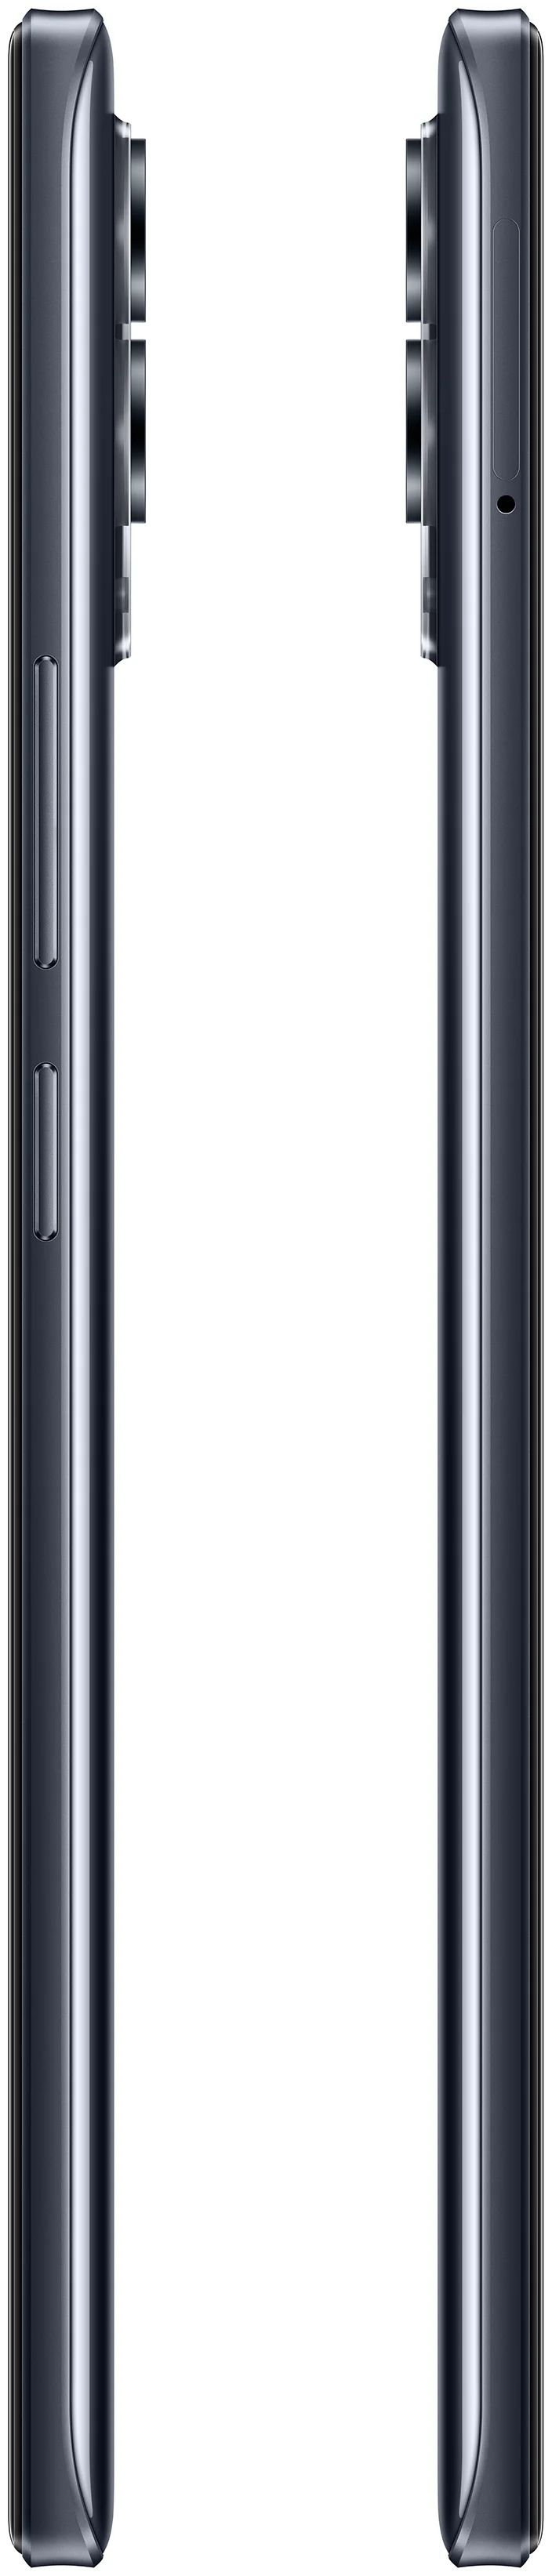 Realme 8 Pro 6/128GB - SIM-карты: 2 (nano SIM)